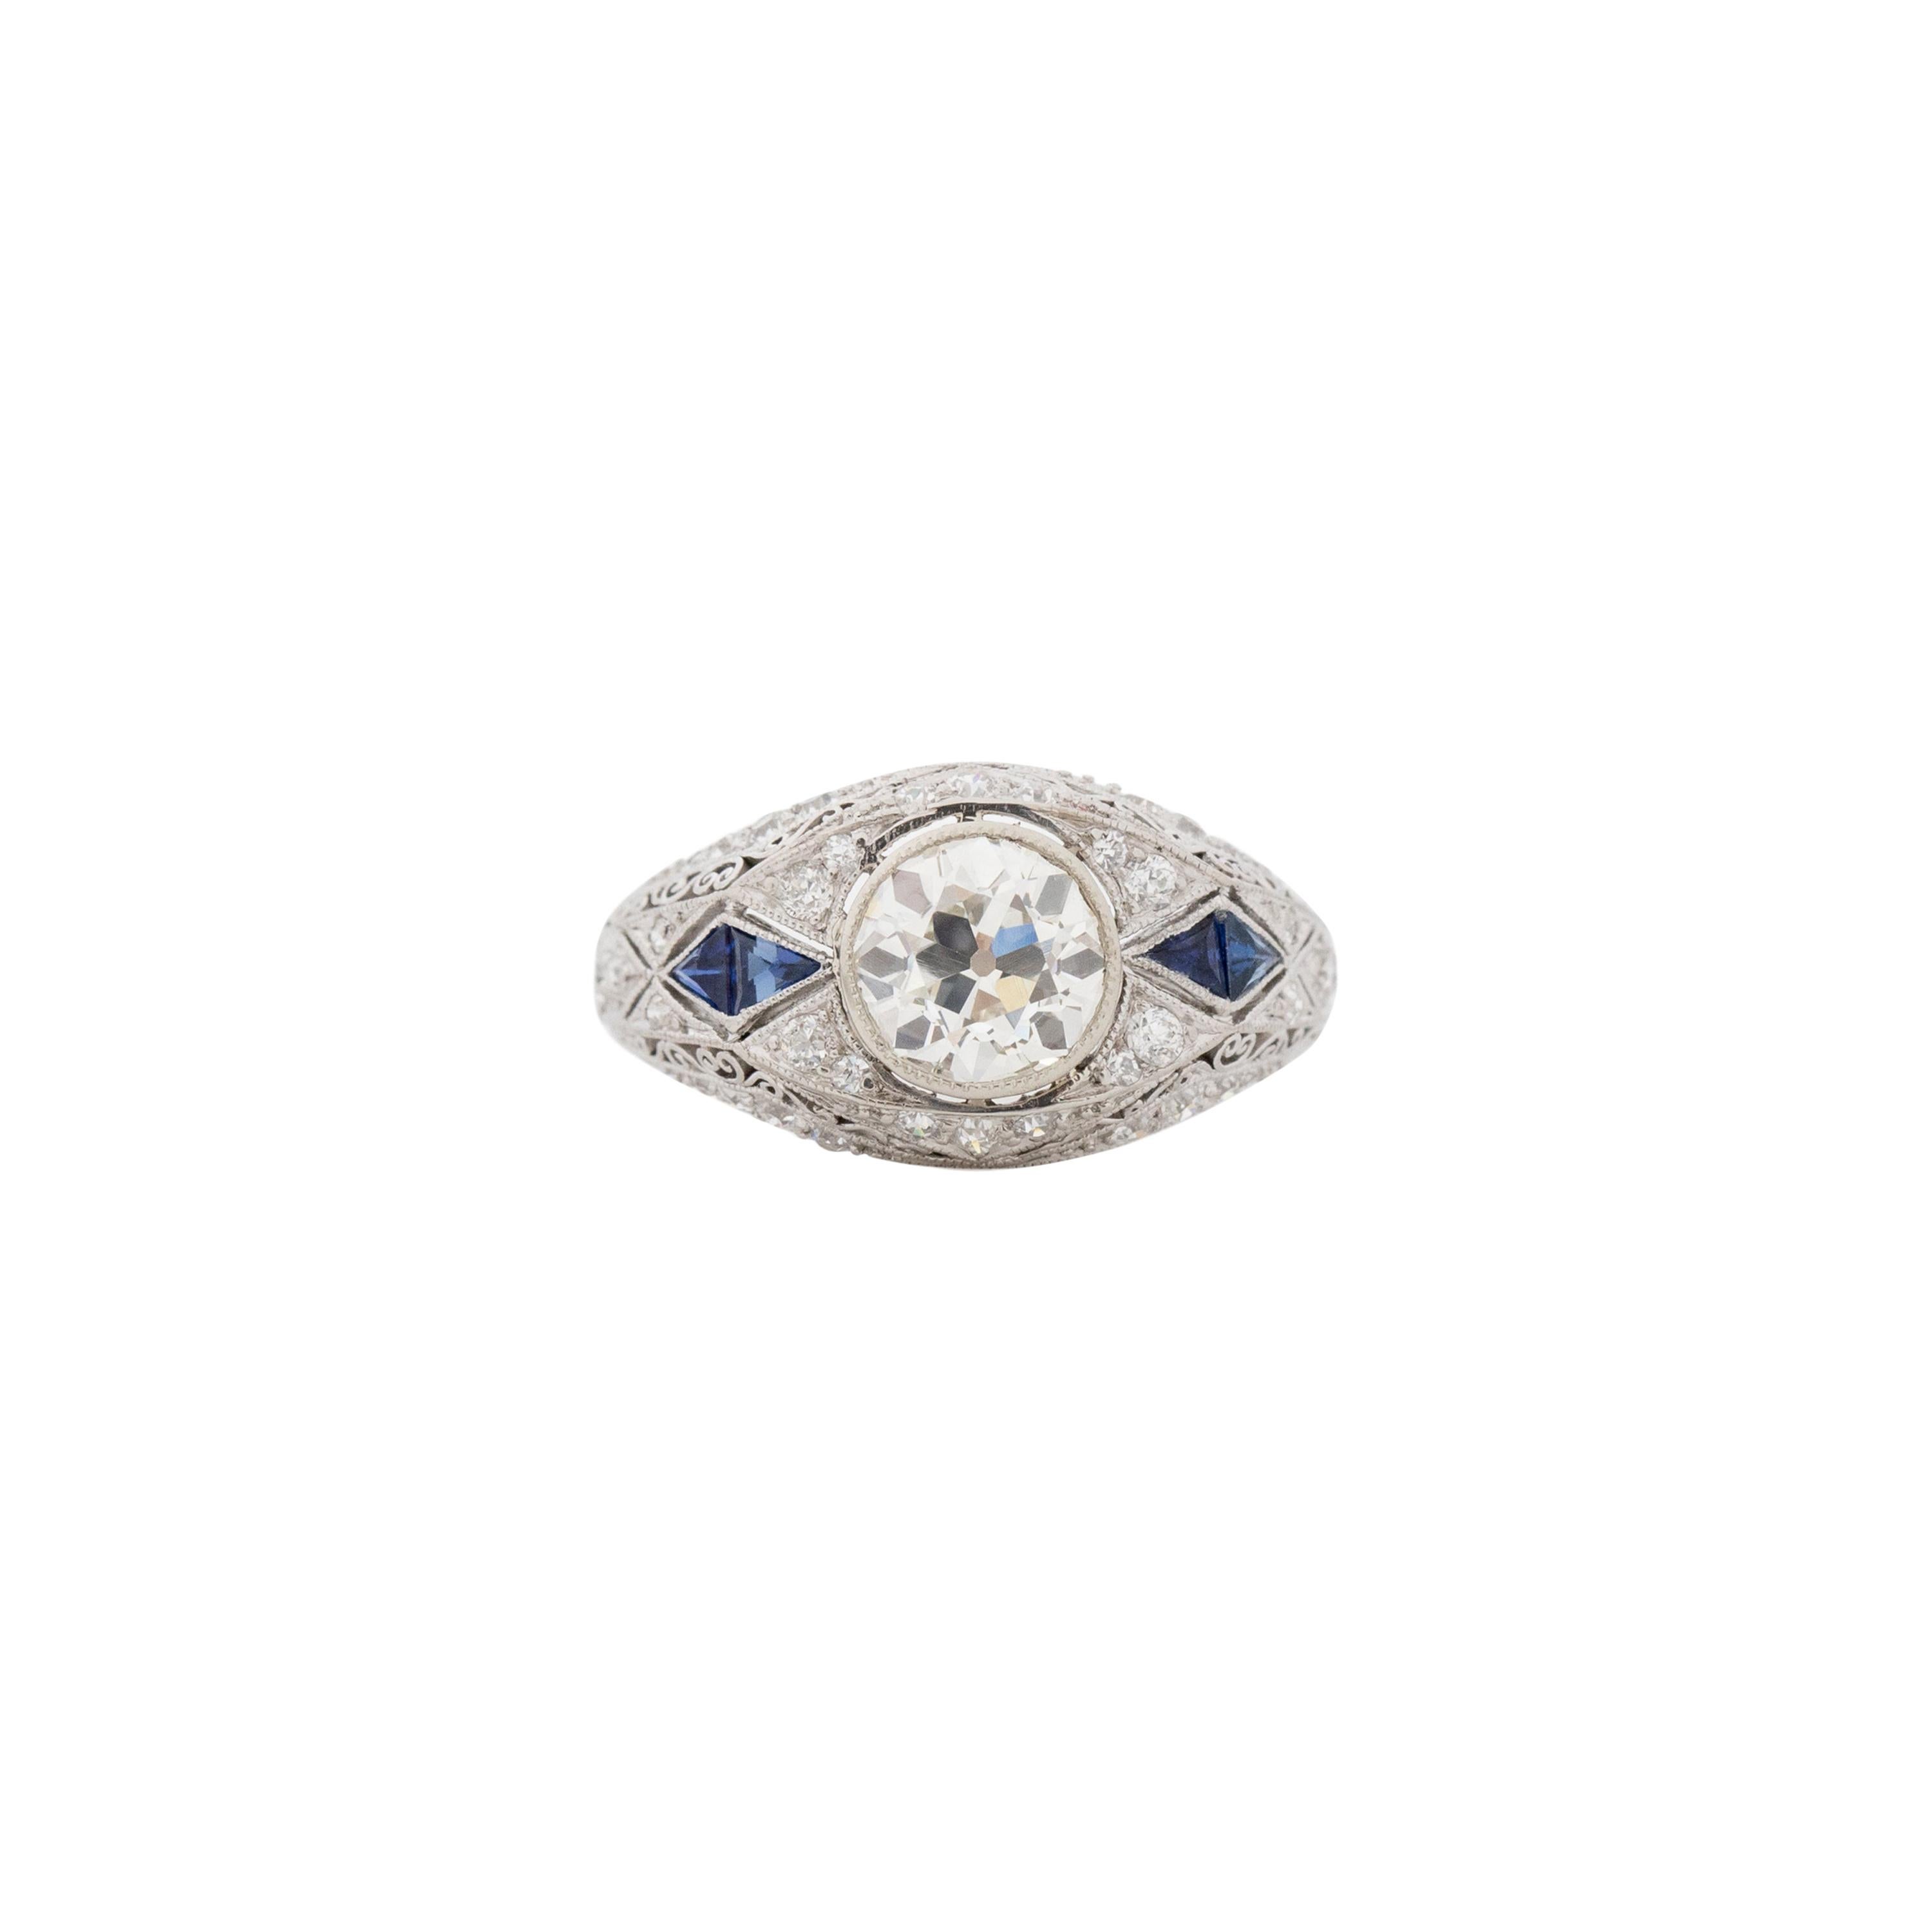 GIA-zertifizierter Platin-Verlobungsring mit 1.27 Karat Art Deco-Diamant